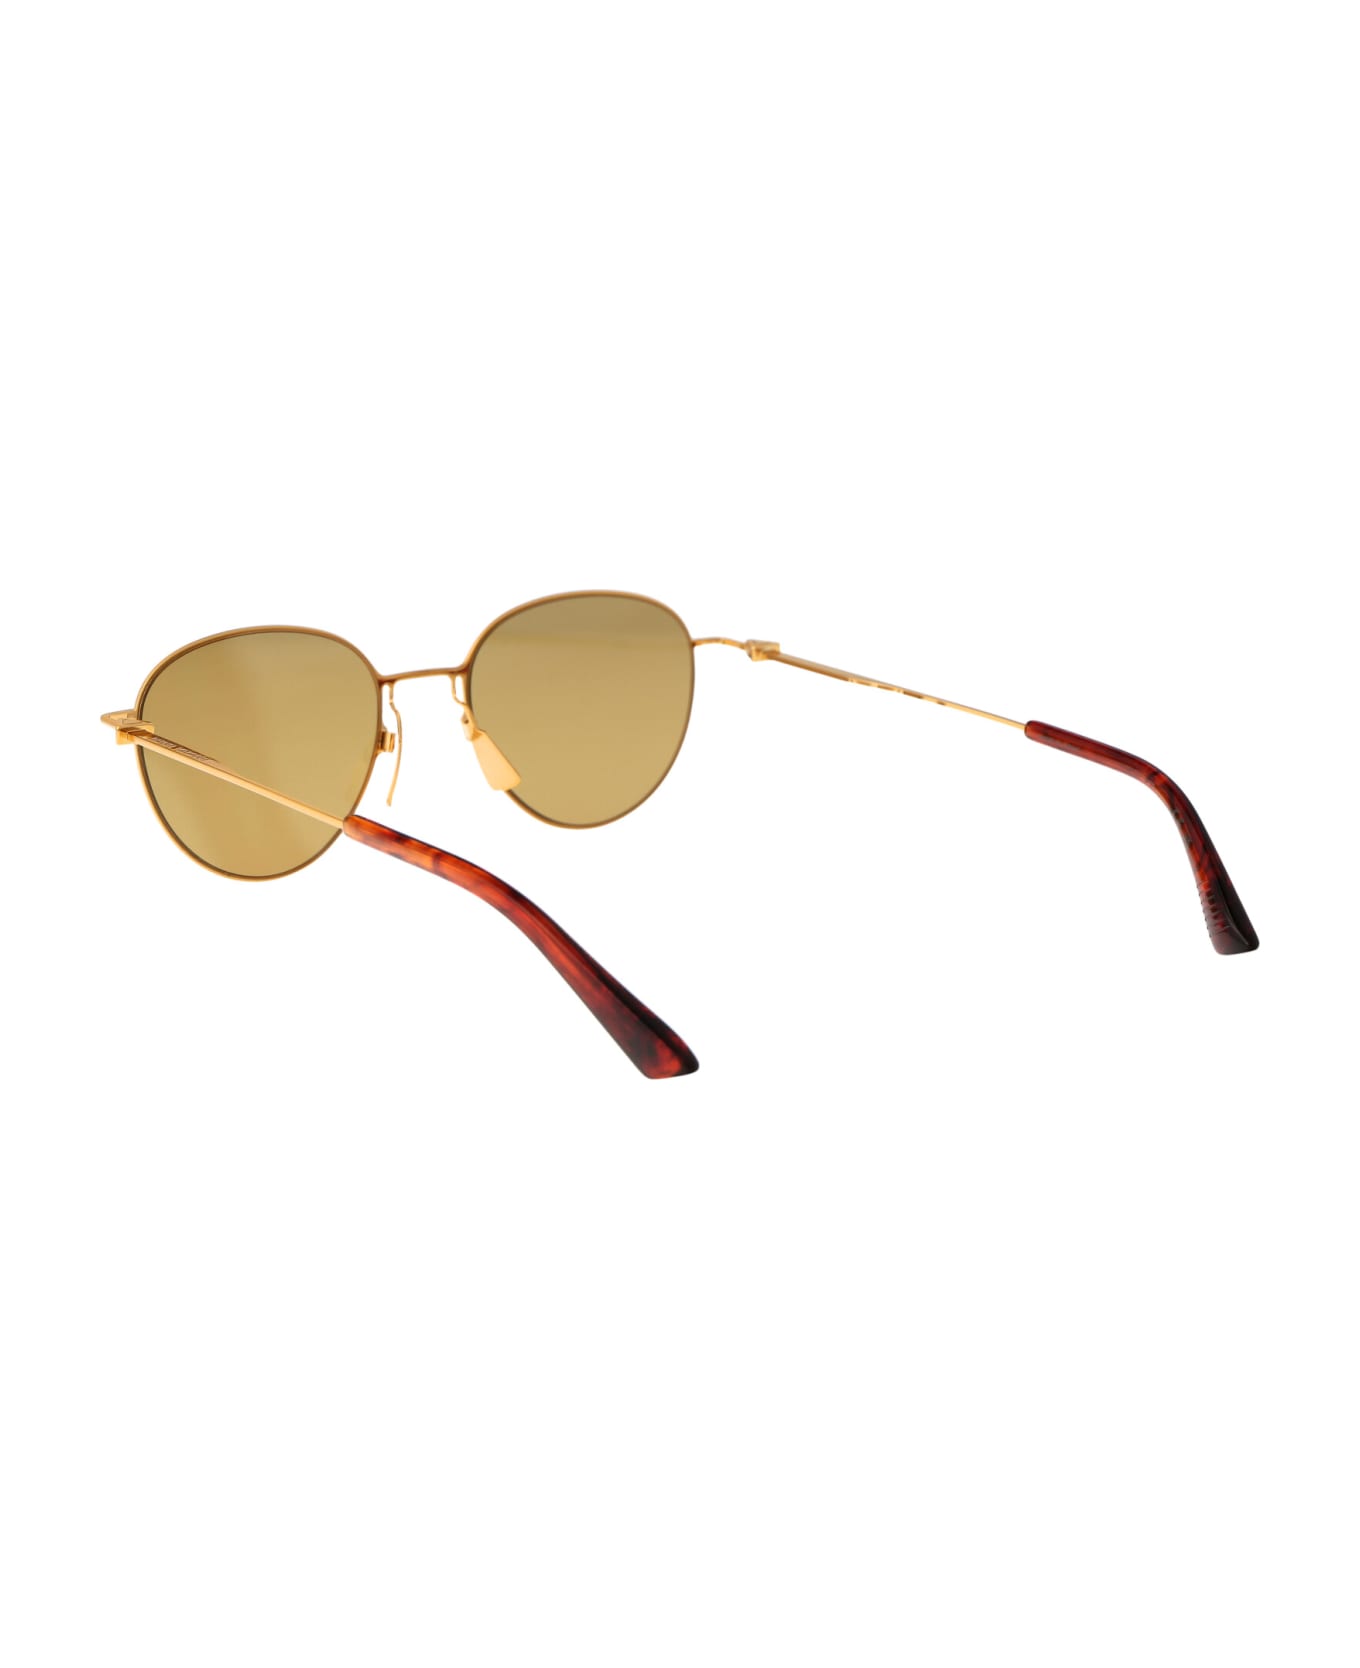 Bottega Veneta Eyewear Bv1268s Sunglasses - 004 GOLD GOLD BROWN